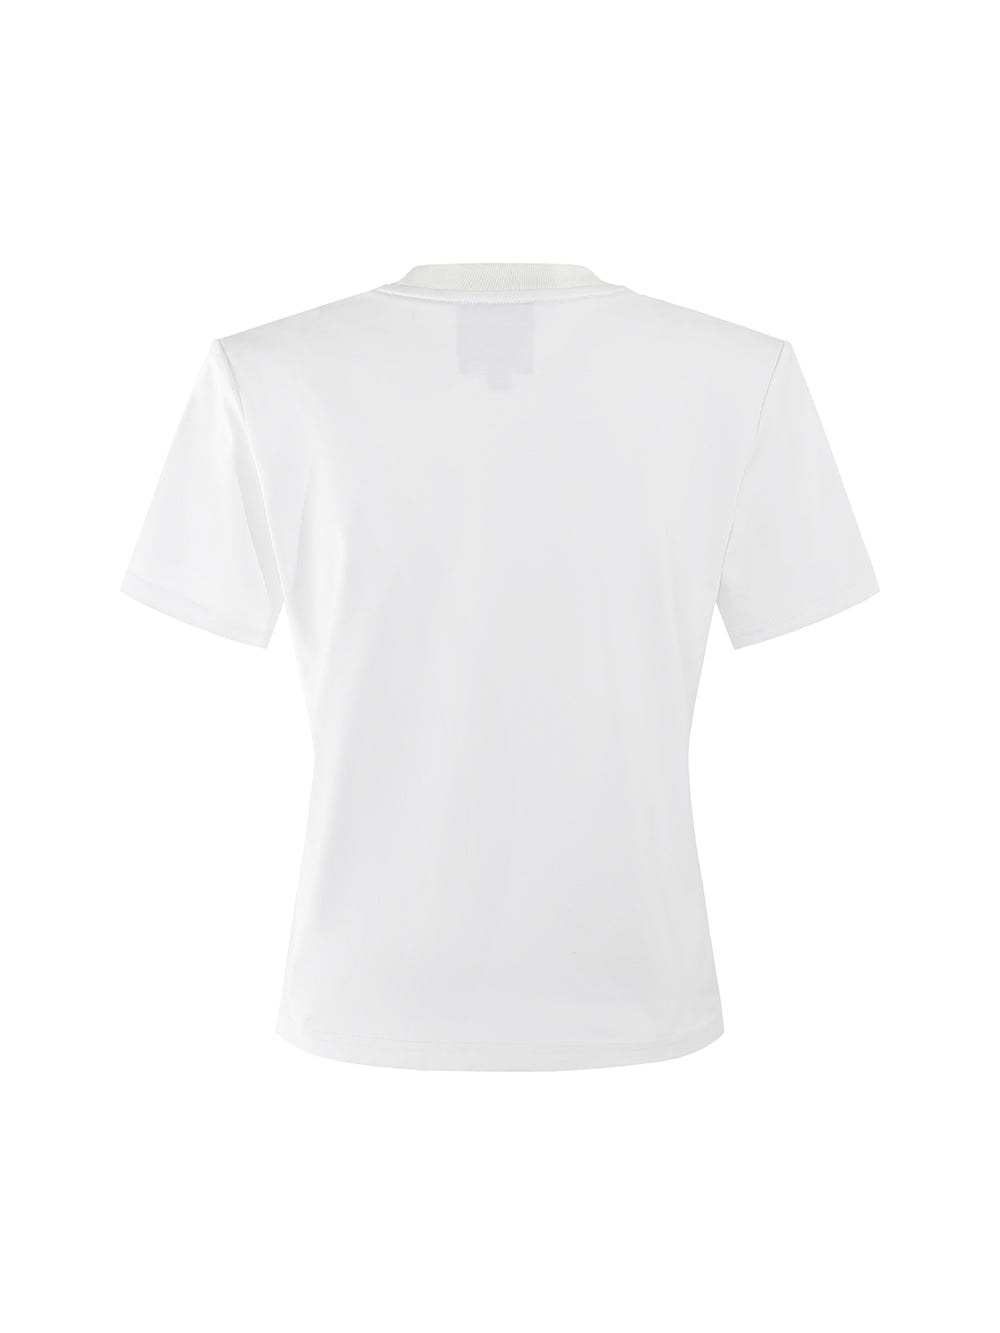 MUKZIN Suitable White Classic Fresh Cool T-shirts